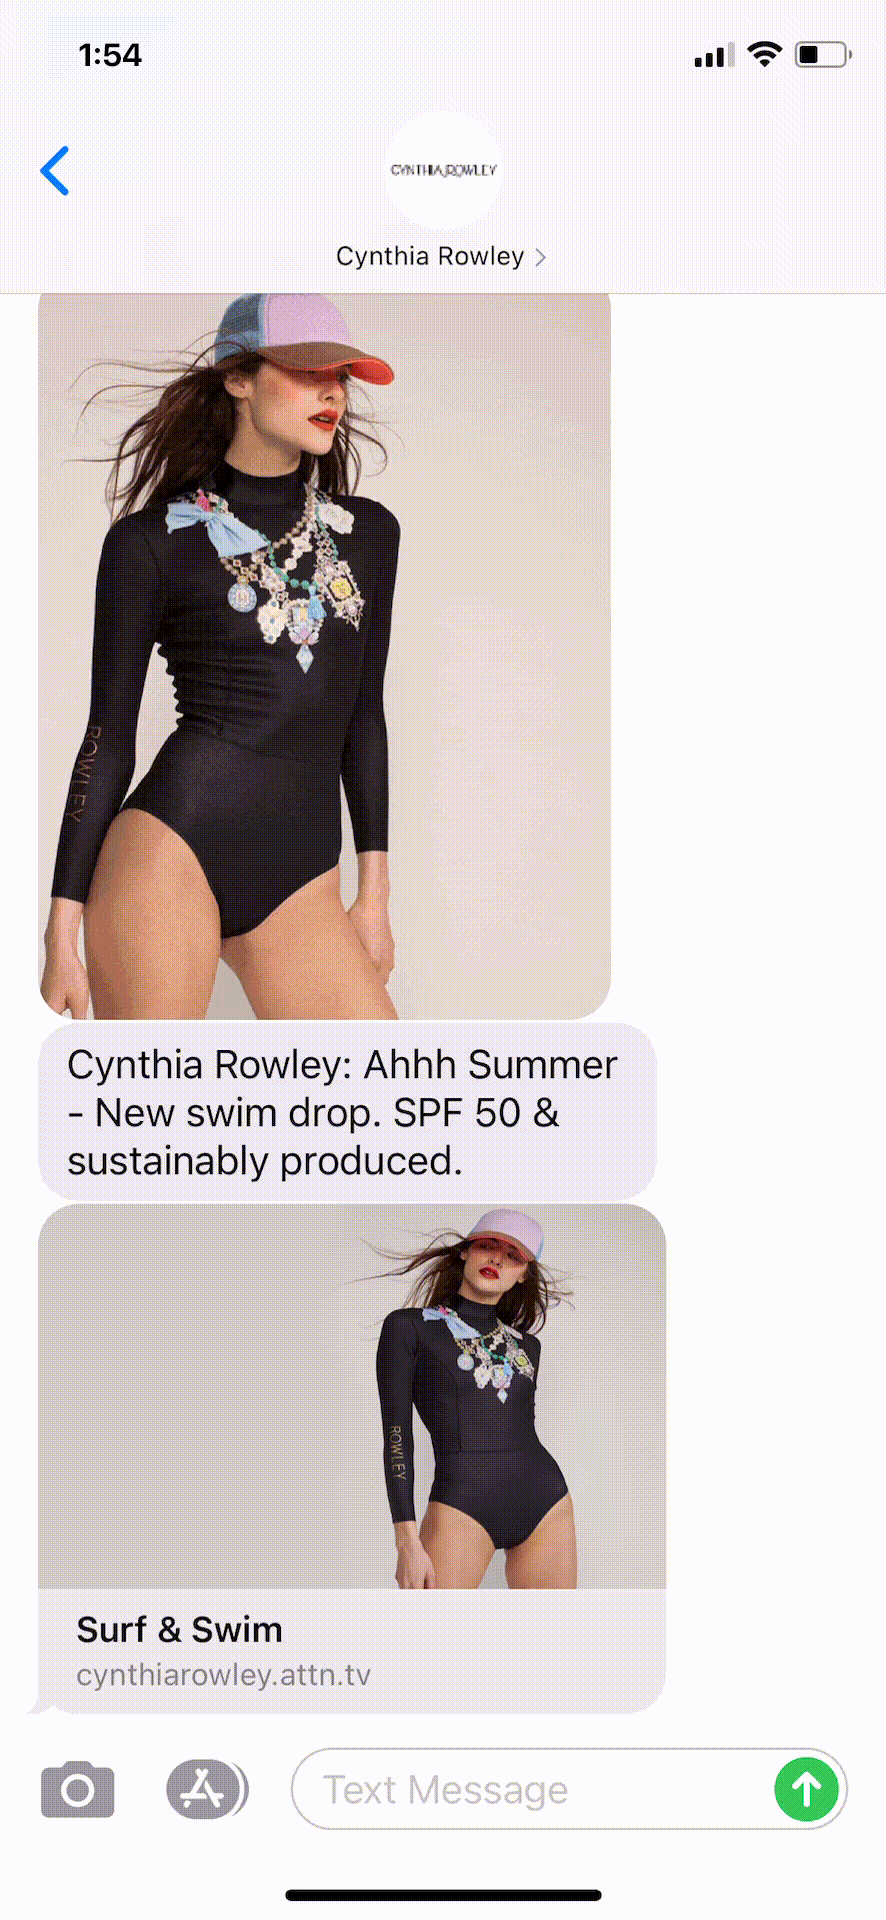 Cynthia-Rowley-Text-Message-Marketing-Example-05.29.2021